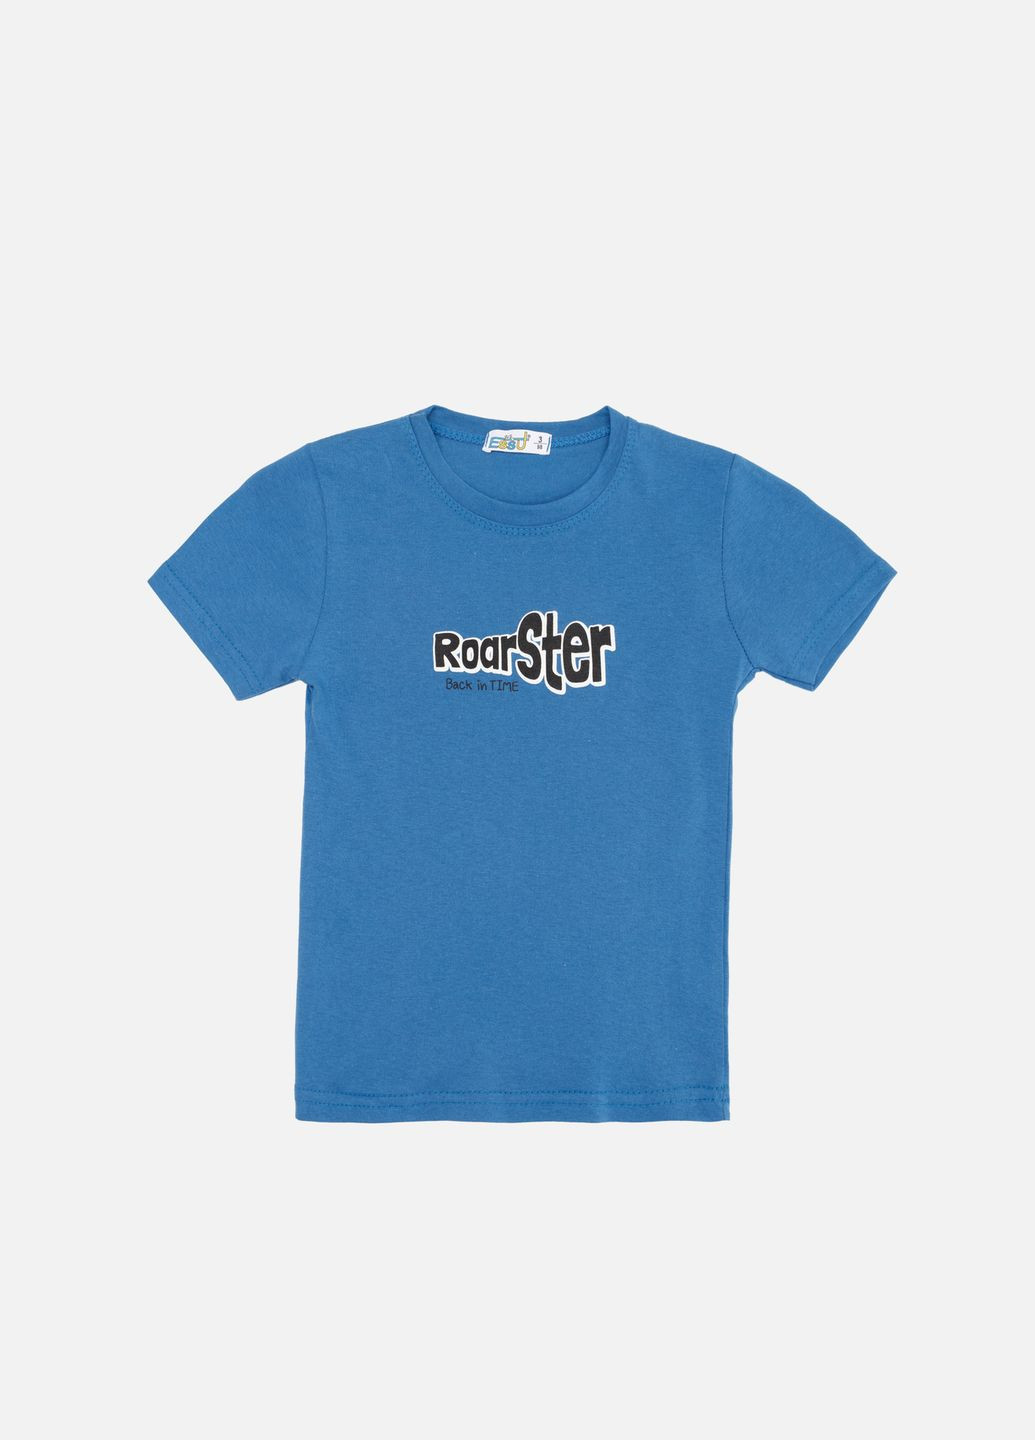 Синяя летняя футболка с коротким рукавом для мальчика цвет синий цб-00243922 Essu